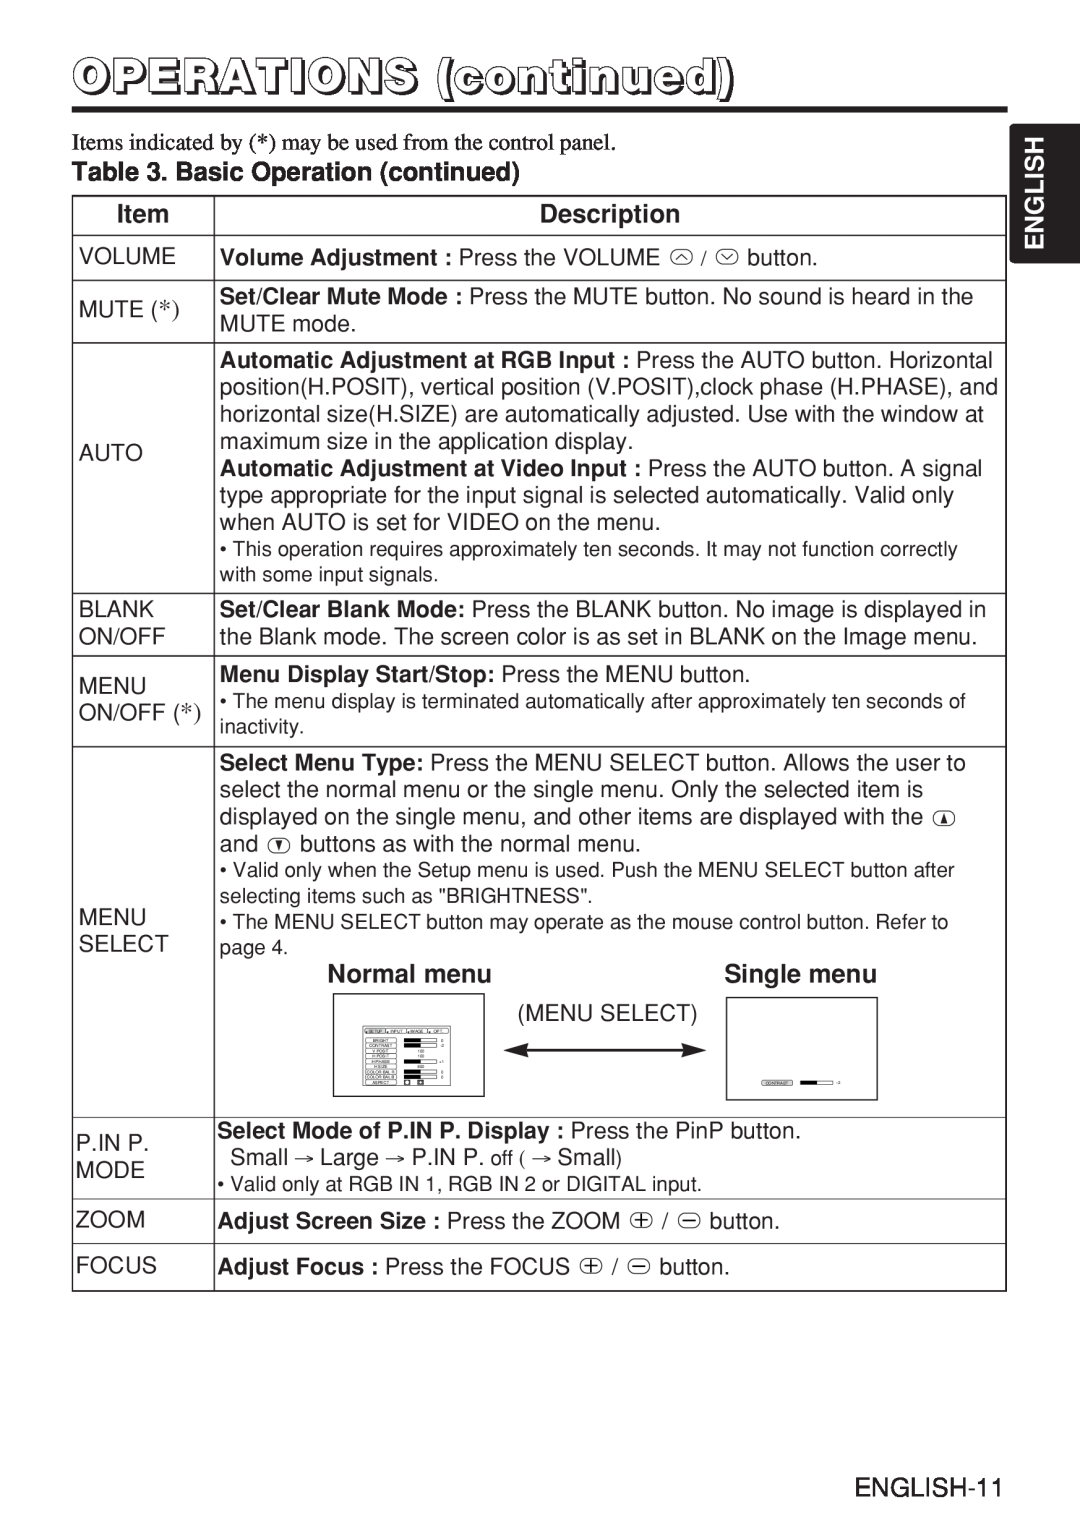 Hitachi CP-X980W Basic Operation continued, Normal menu, Single menu, OPERATIONS continued, Description, English 